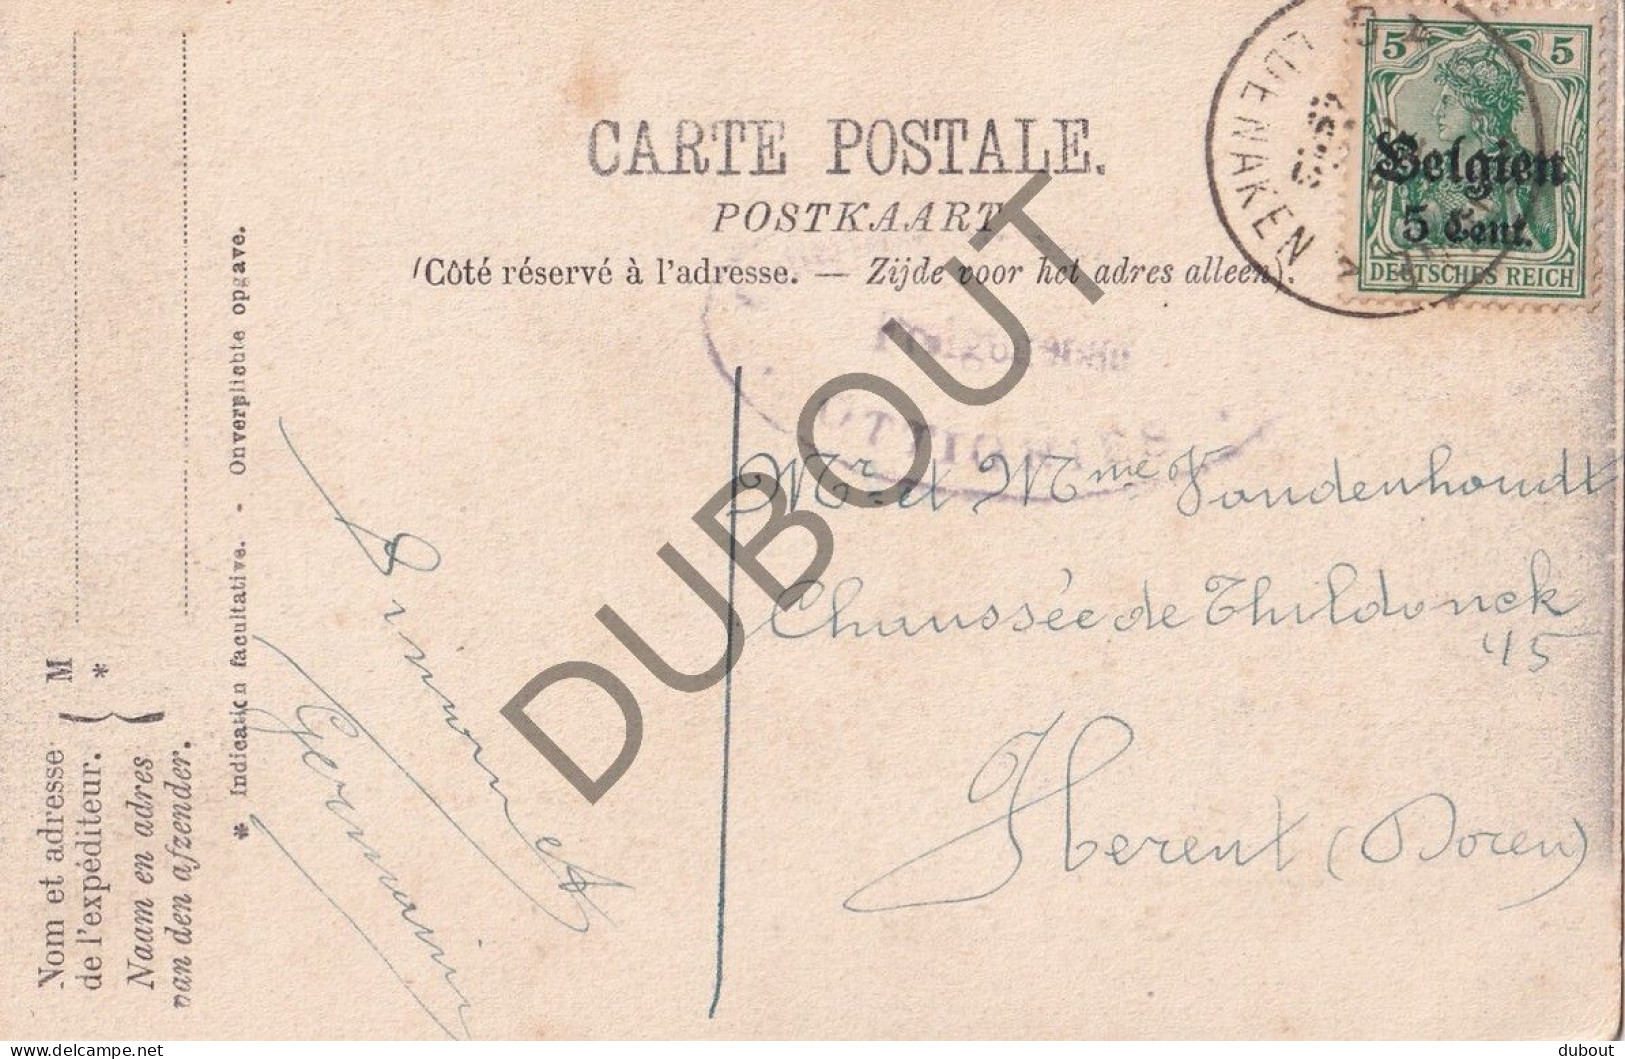 Postkaart - Carte Postale - Jodoigne/Geldenaken - Château Mevis  (C6069) - Jodoigne